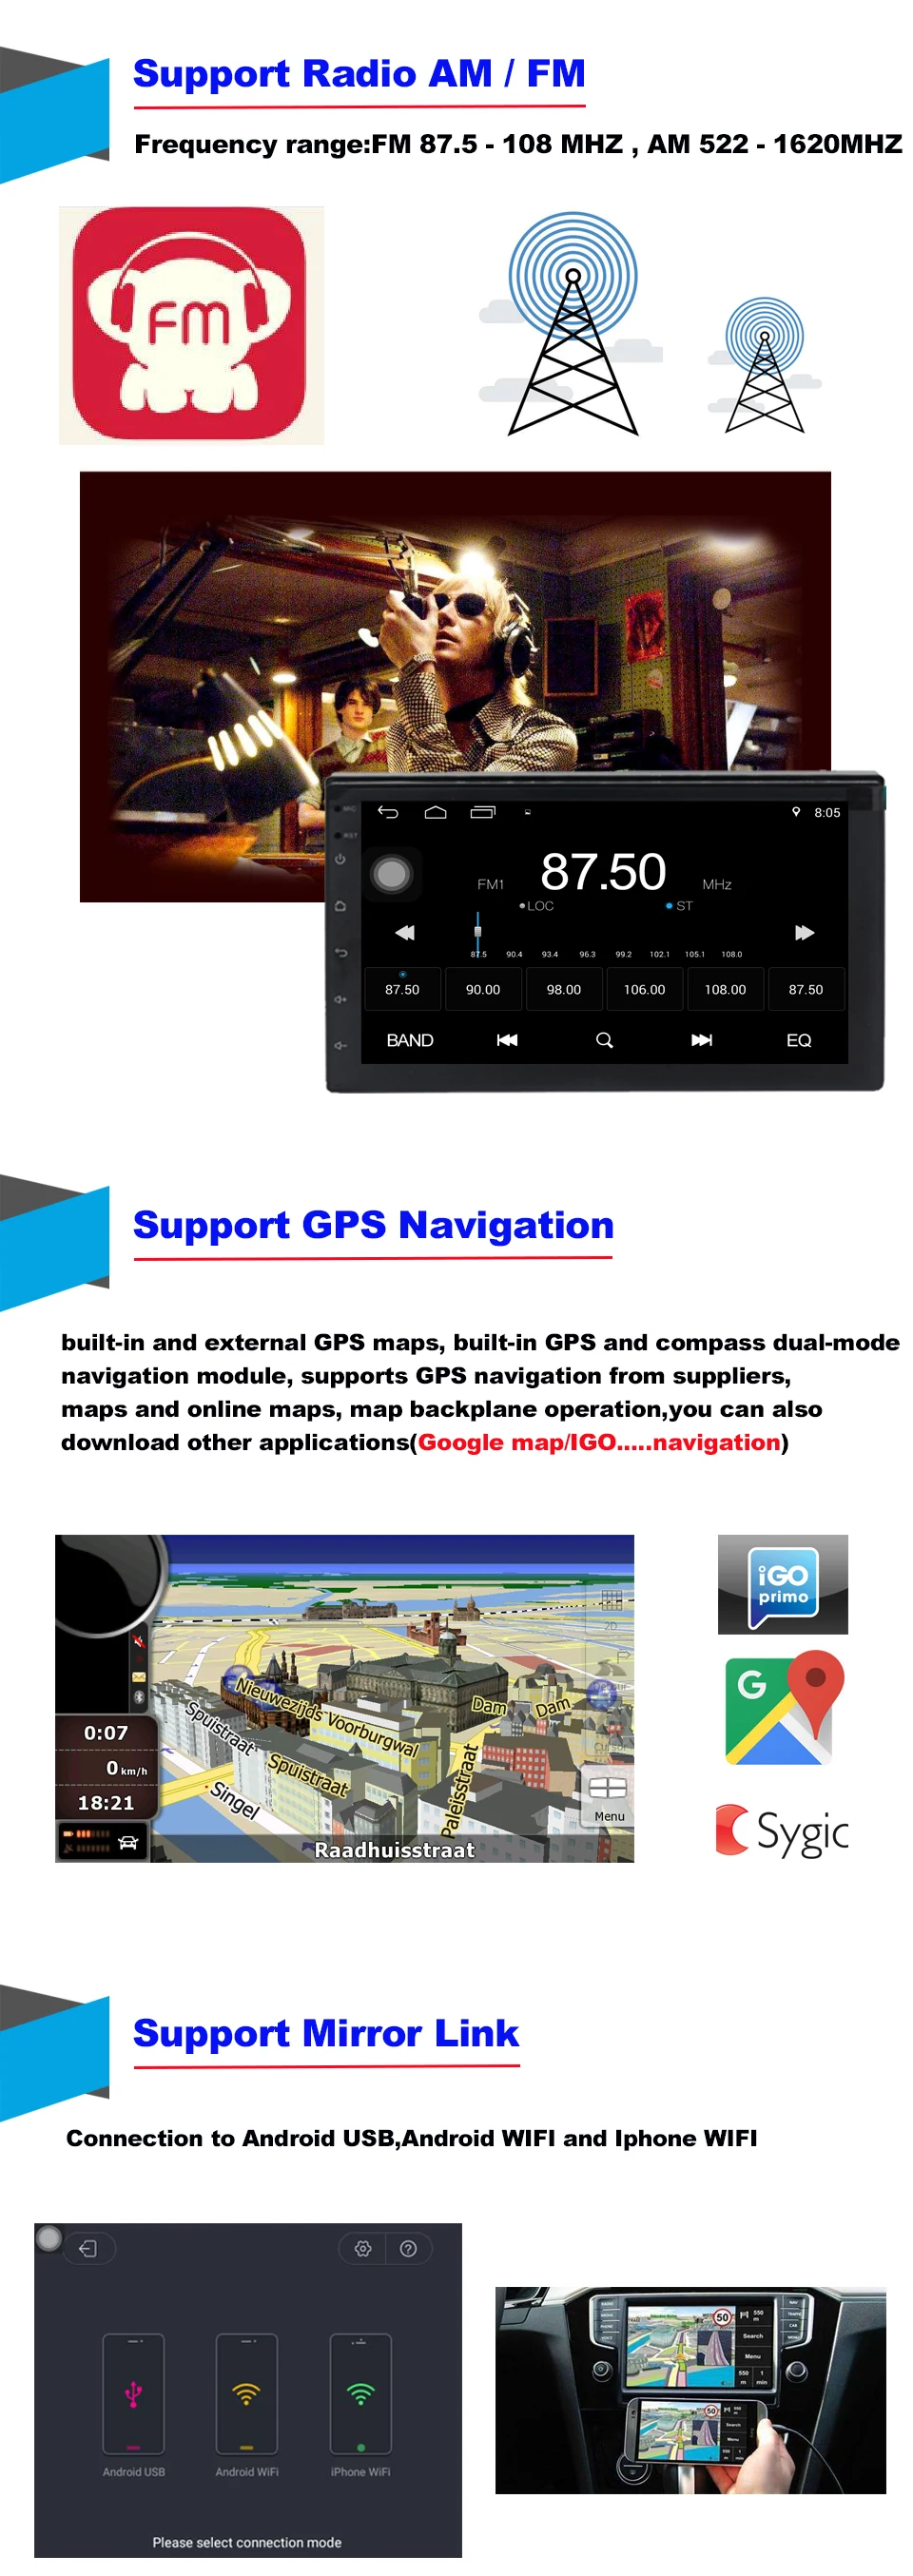 IDOICT Android 8,1 dvd-плеер для автомобиля gps навигация Мультимедиа для peugeot 301 Citroen Elysee радио 2013- DSP